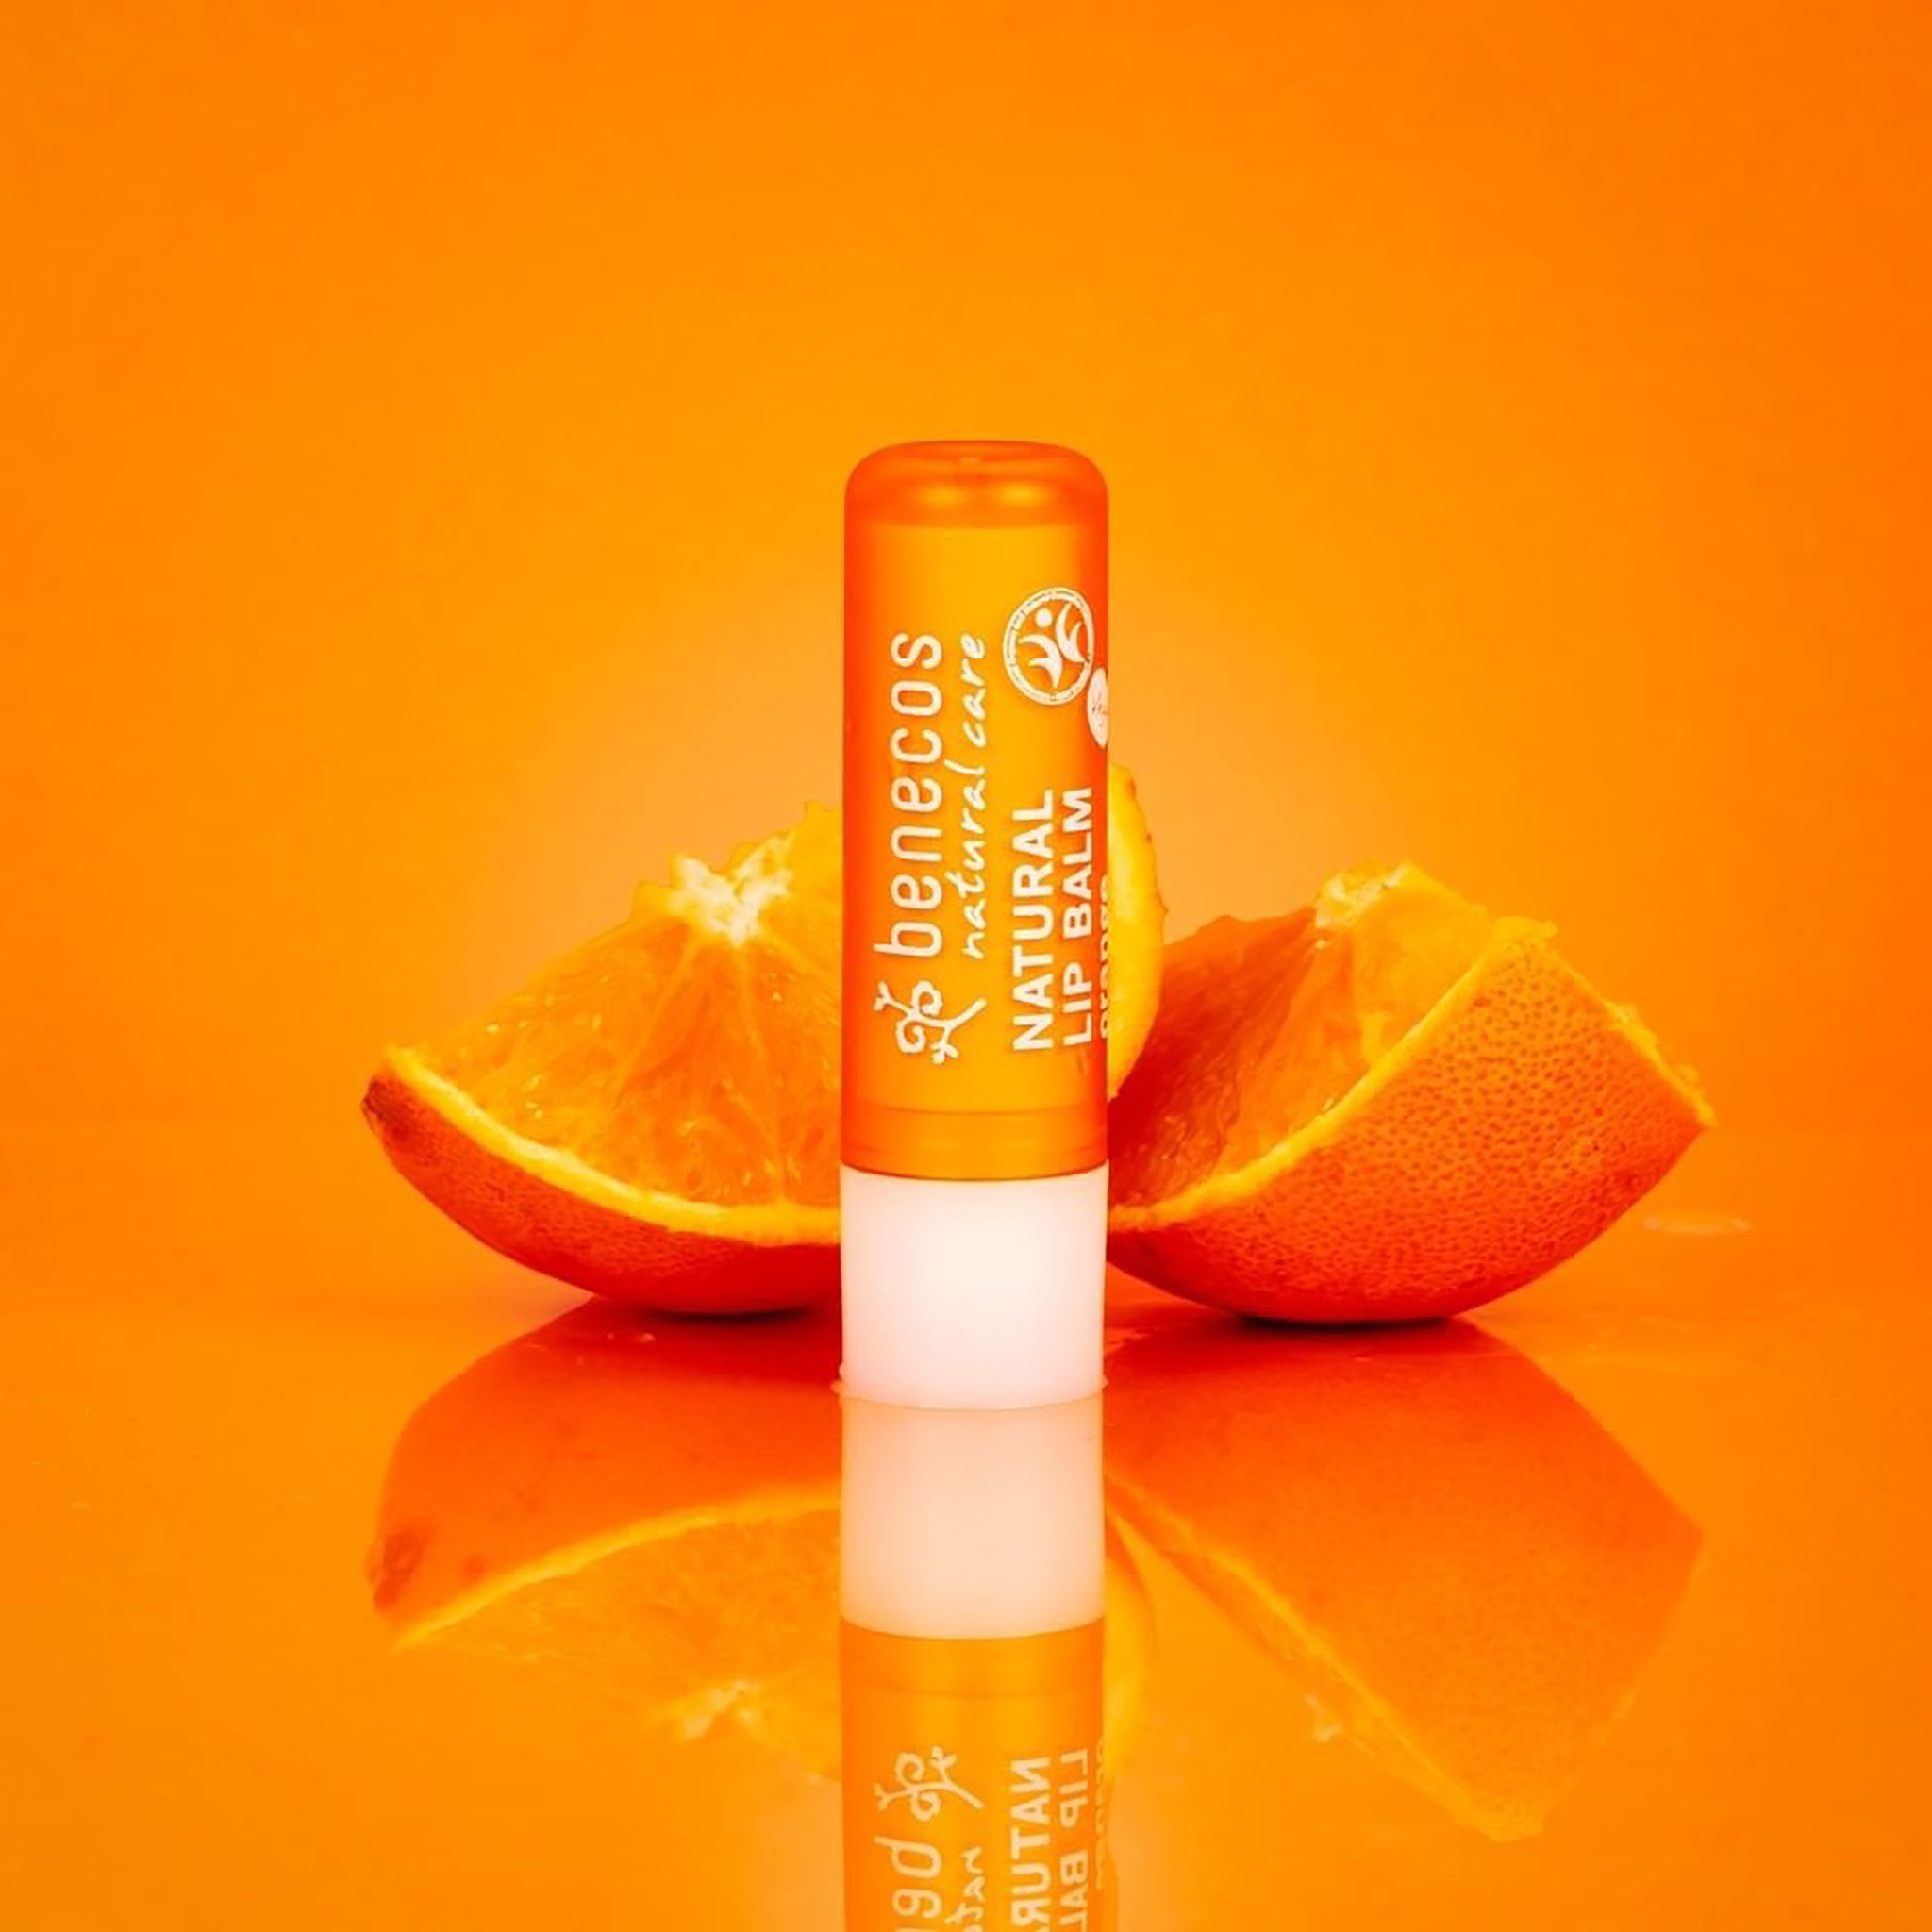 Natural Lip Balm - Orange - mypure.co.uk